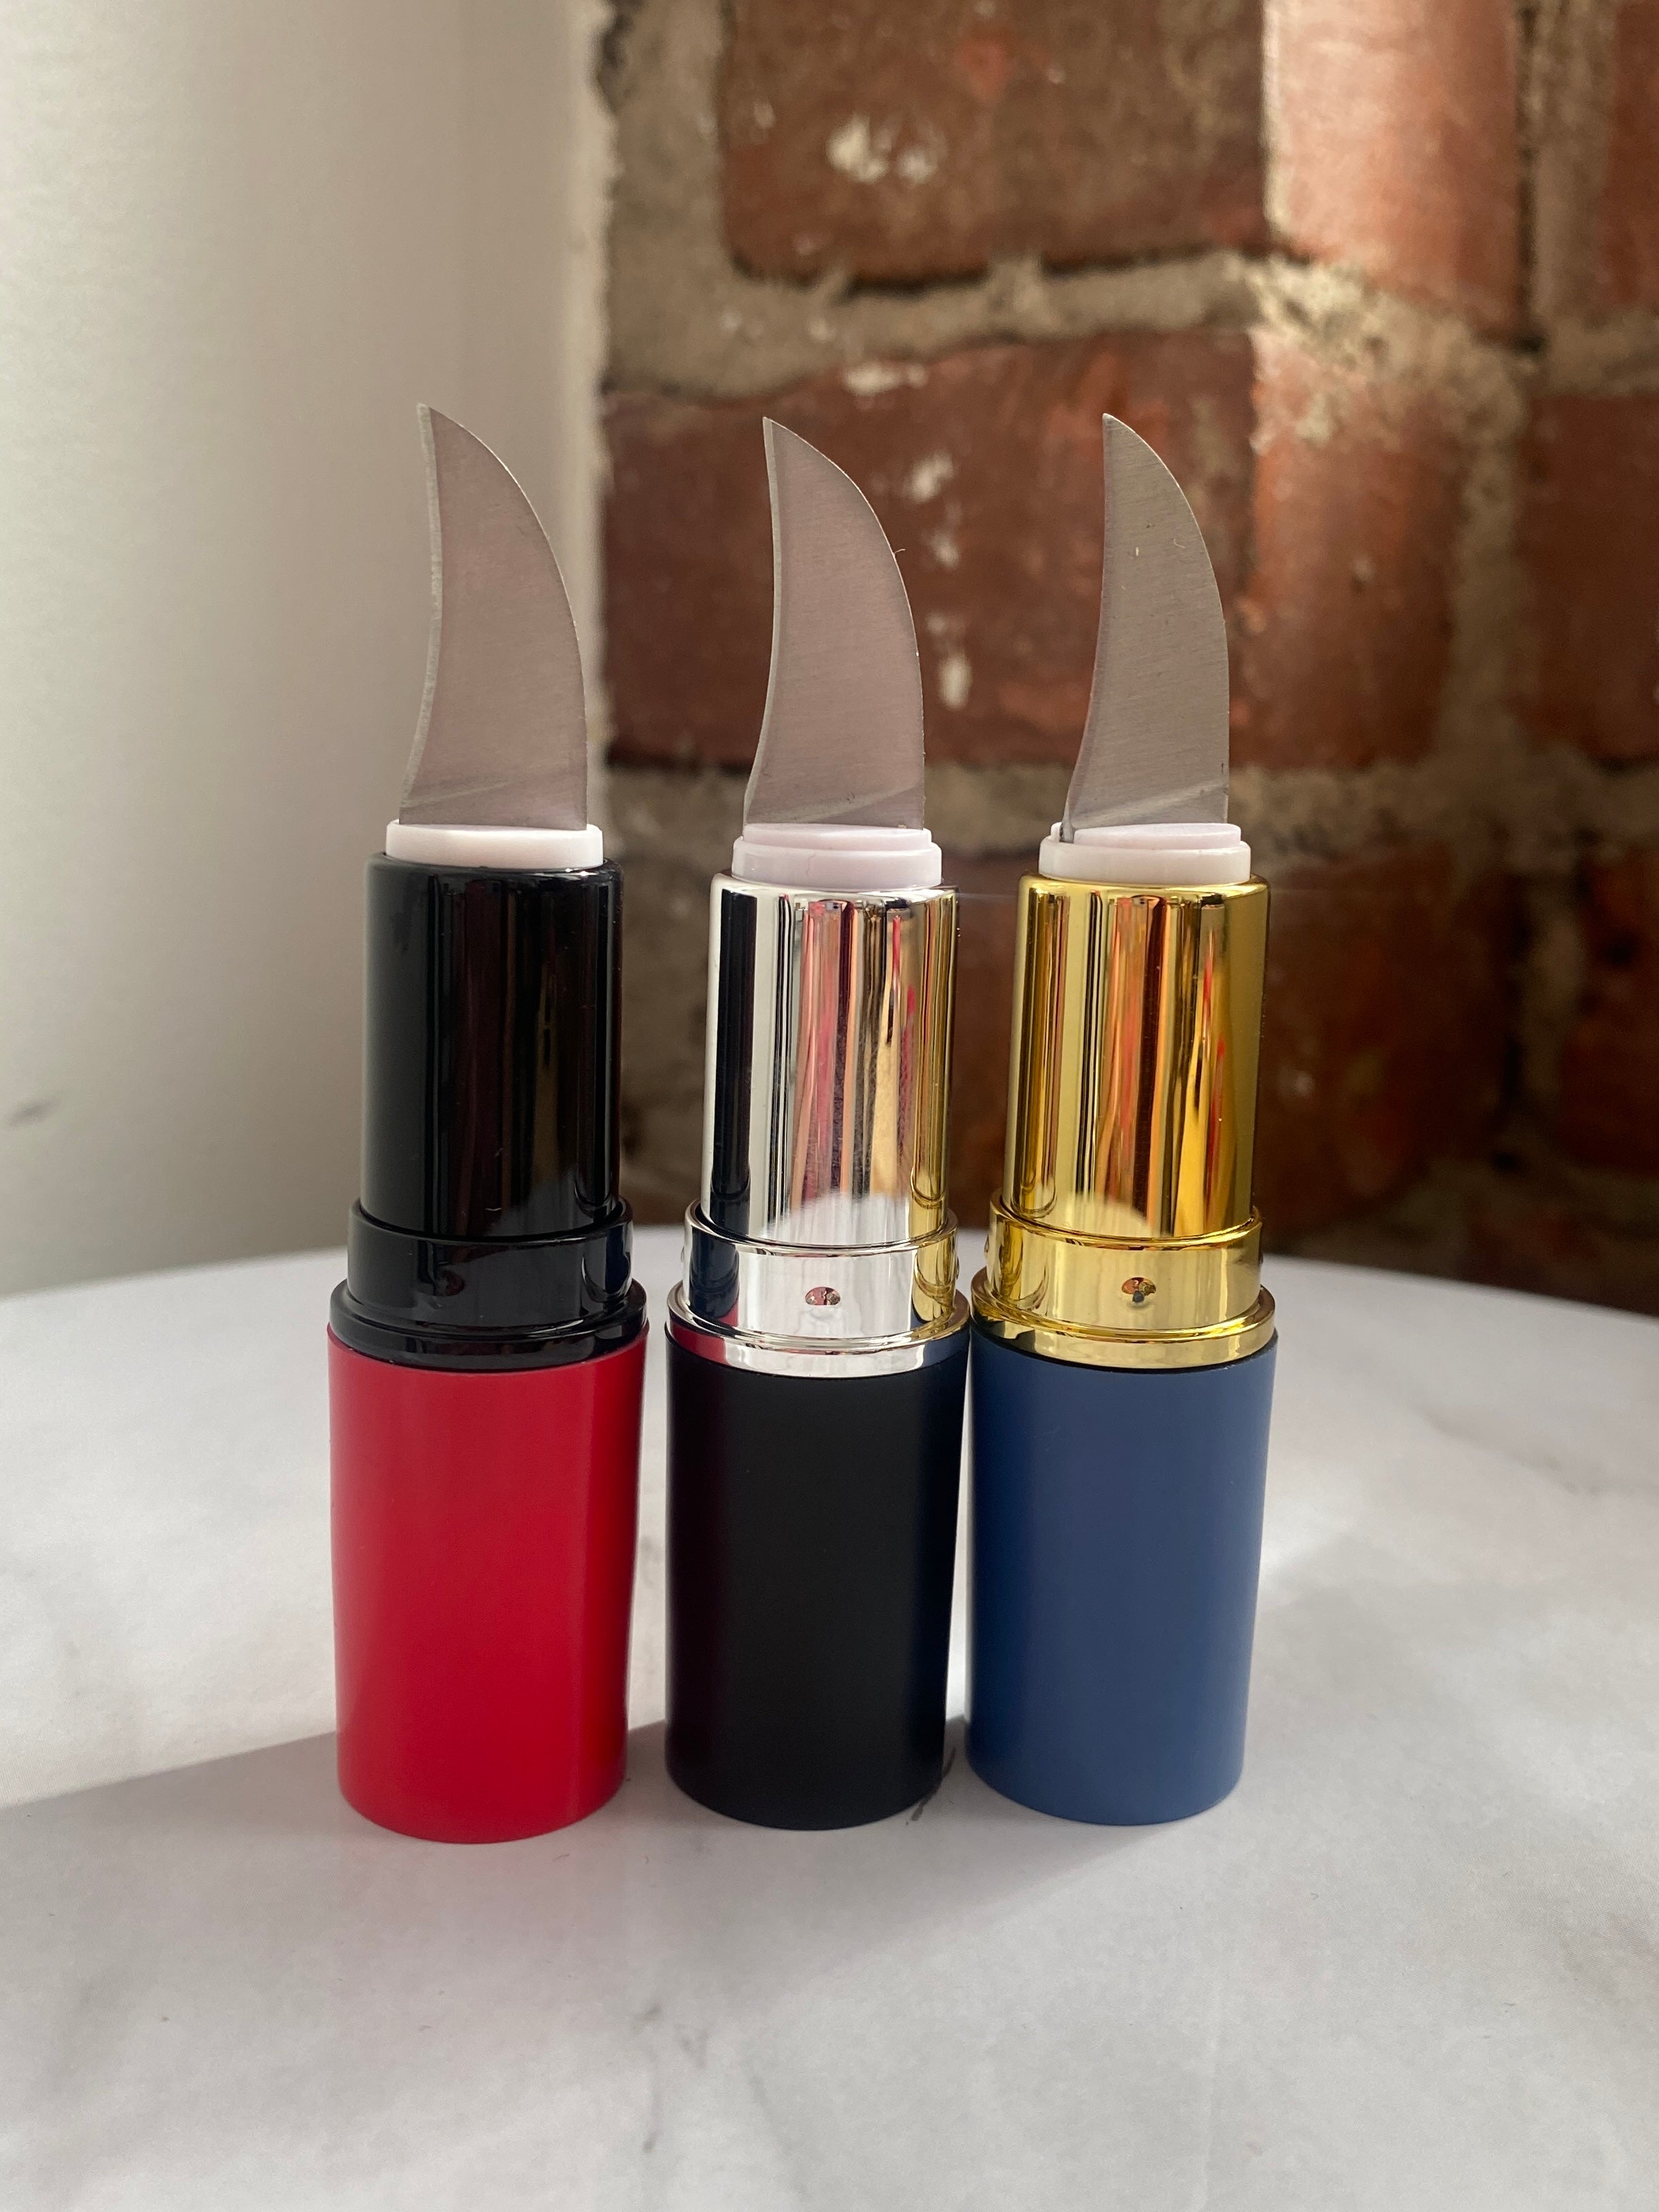 Lipstick Knife